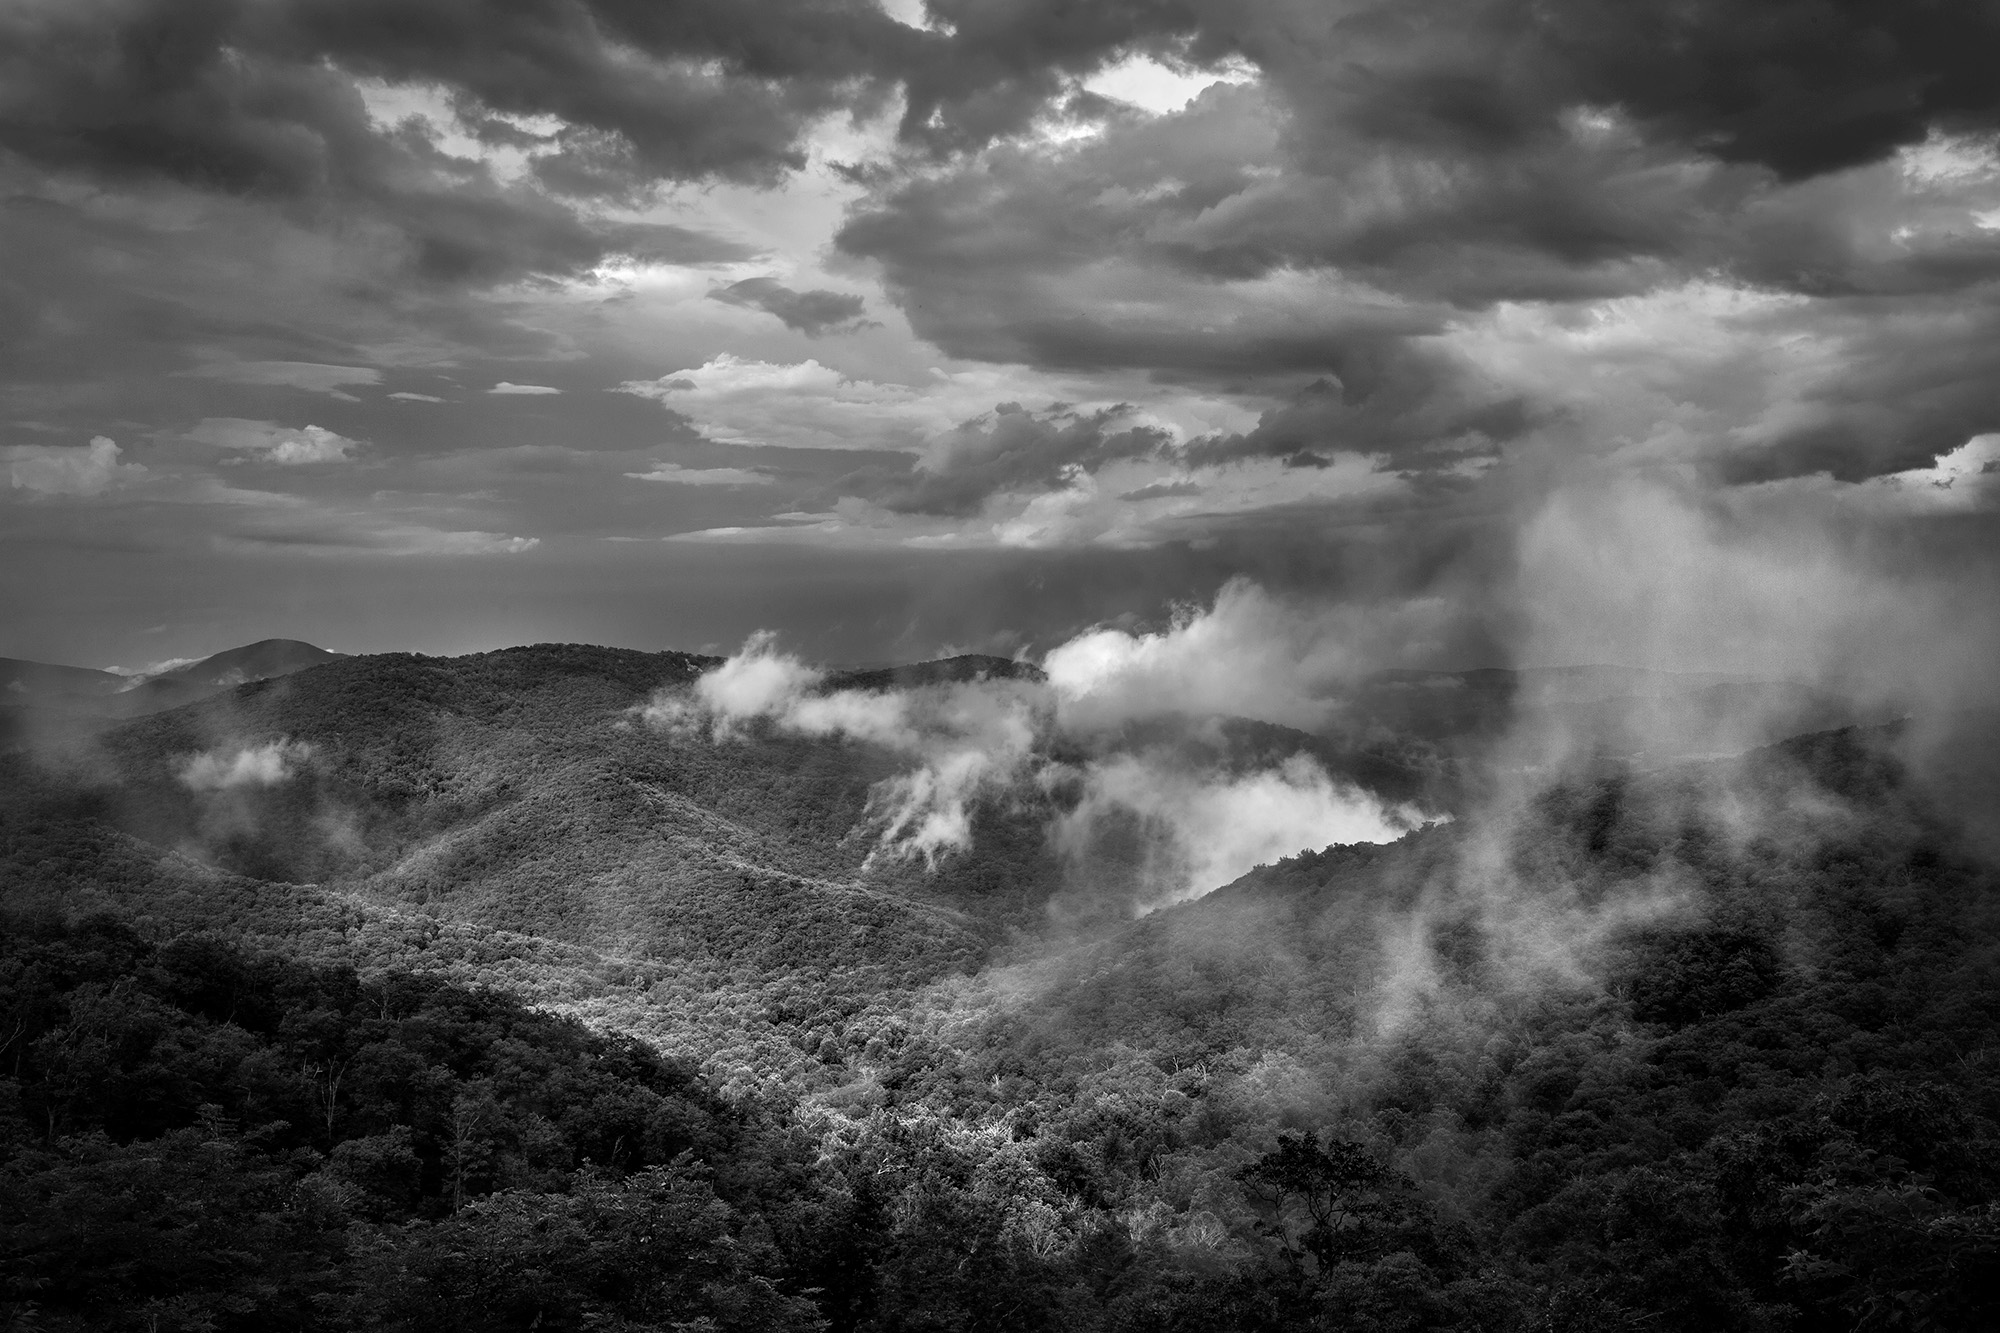 Storm moving through the mountains at Shenandoah National Park